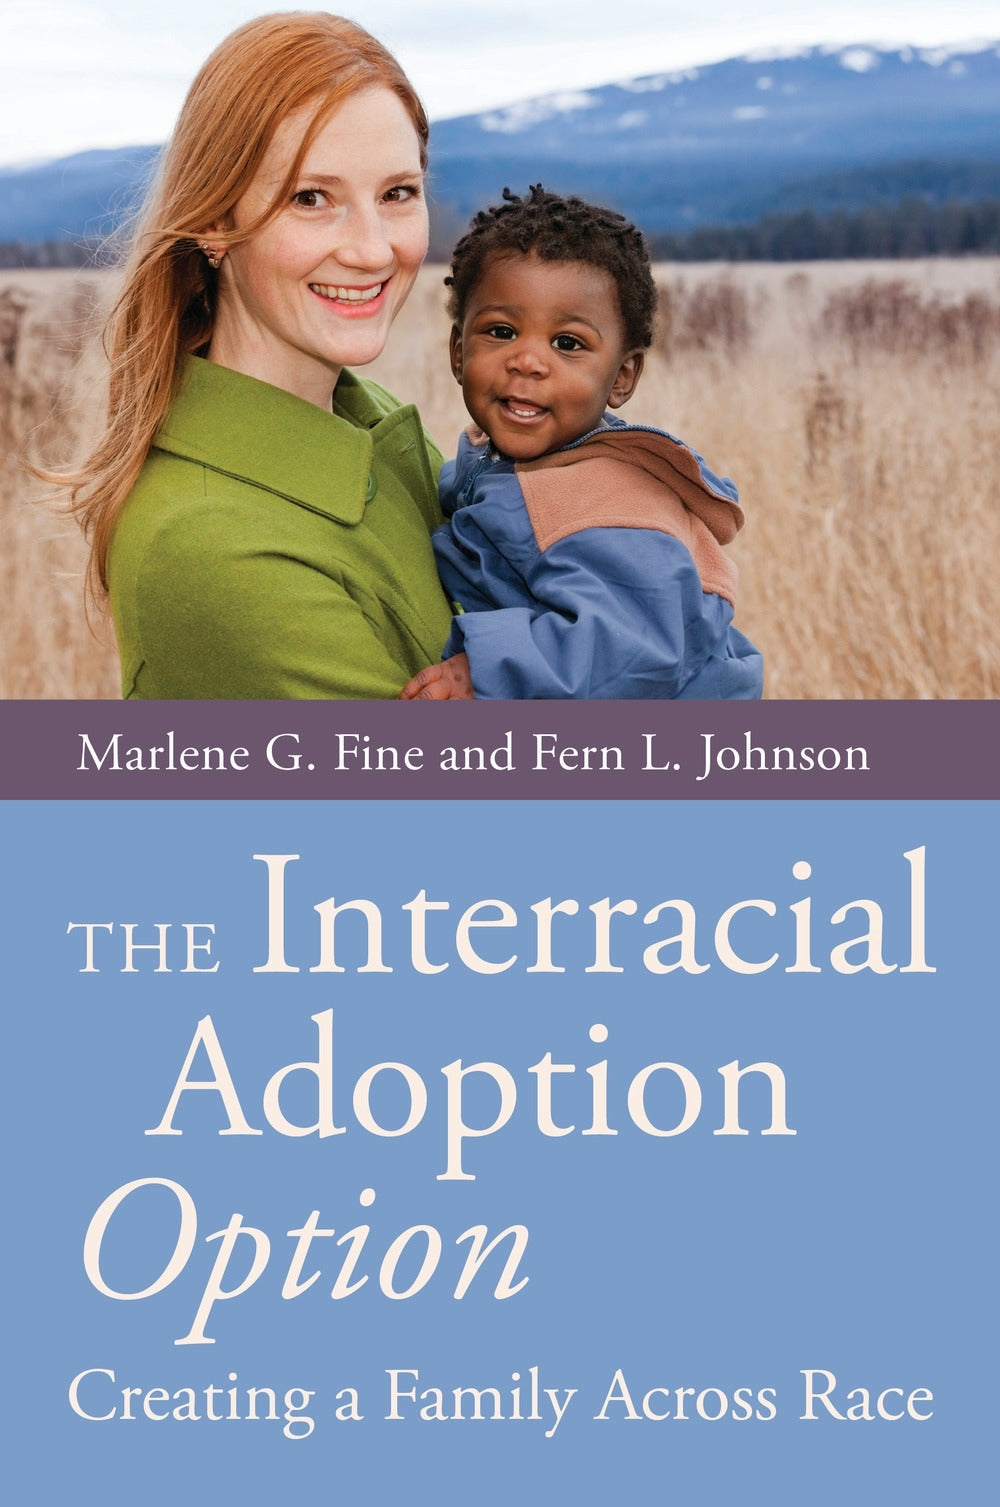 The Interracial Adoption Option by Marlene Fine, Fern Johnson